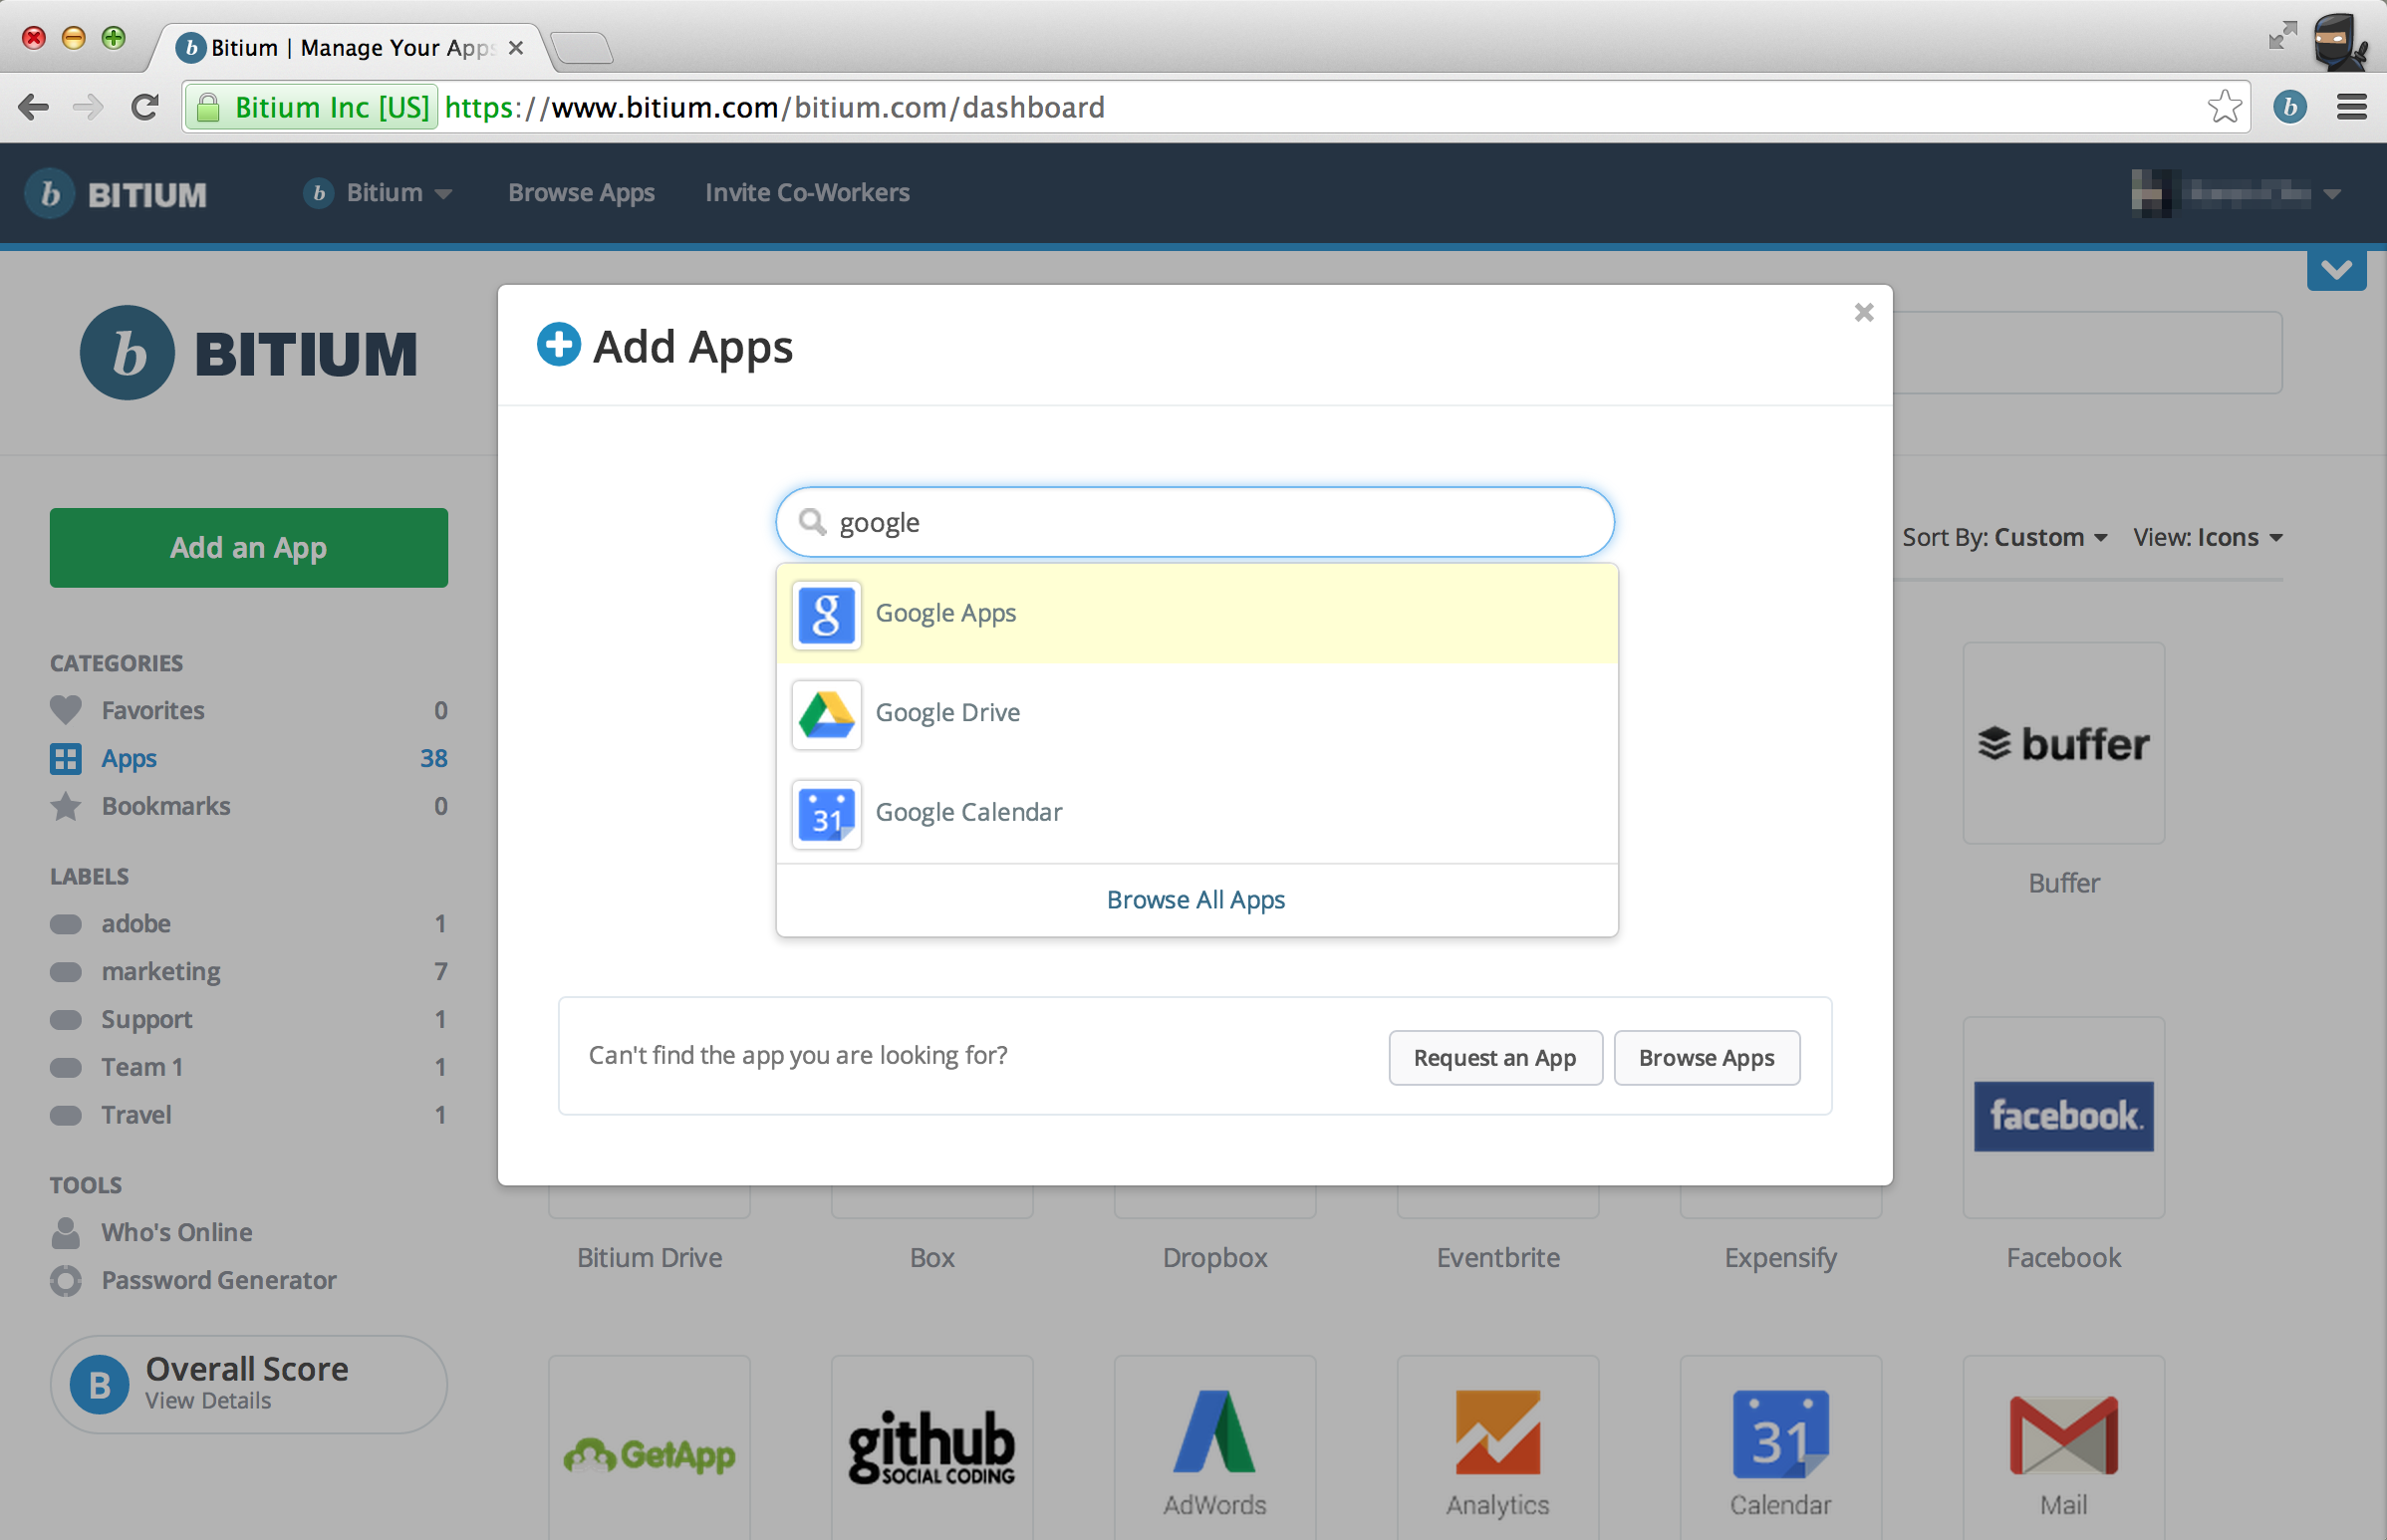 Bitium Software - Easily add an app to your Bitium Dashboard